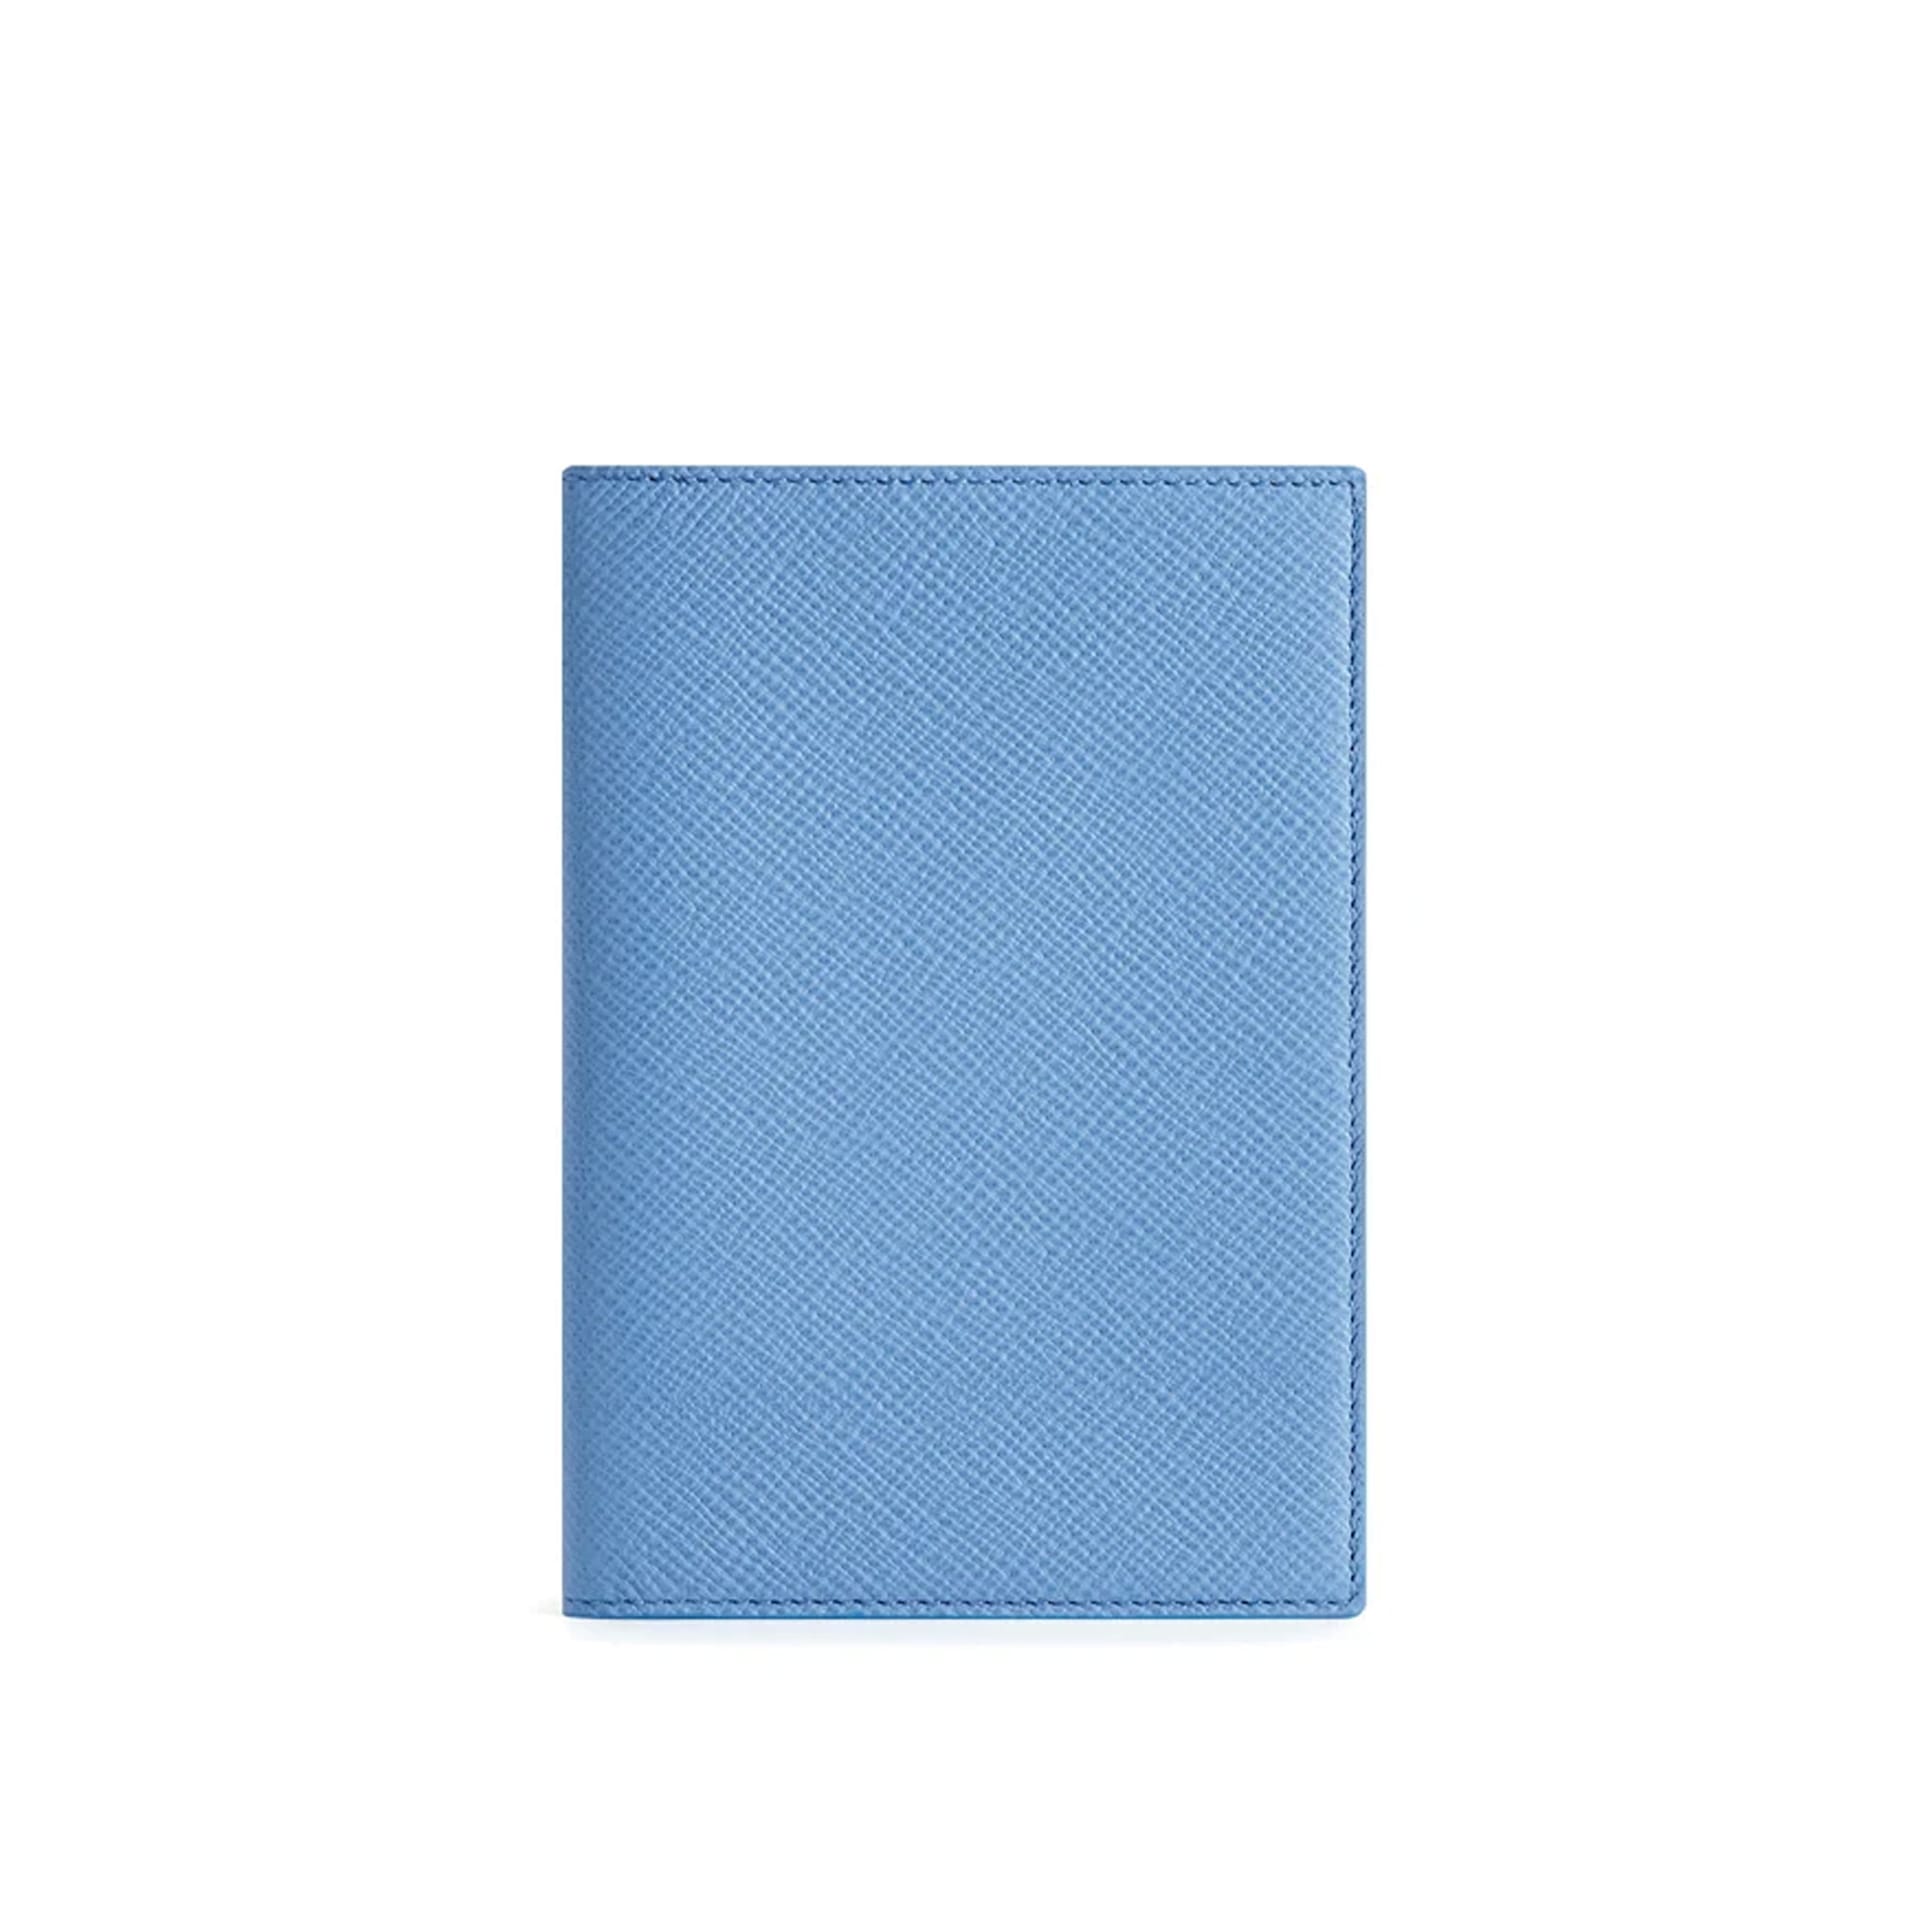 Panama Passport Cover - Nile Blue - Smythson - NO GA